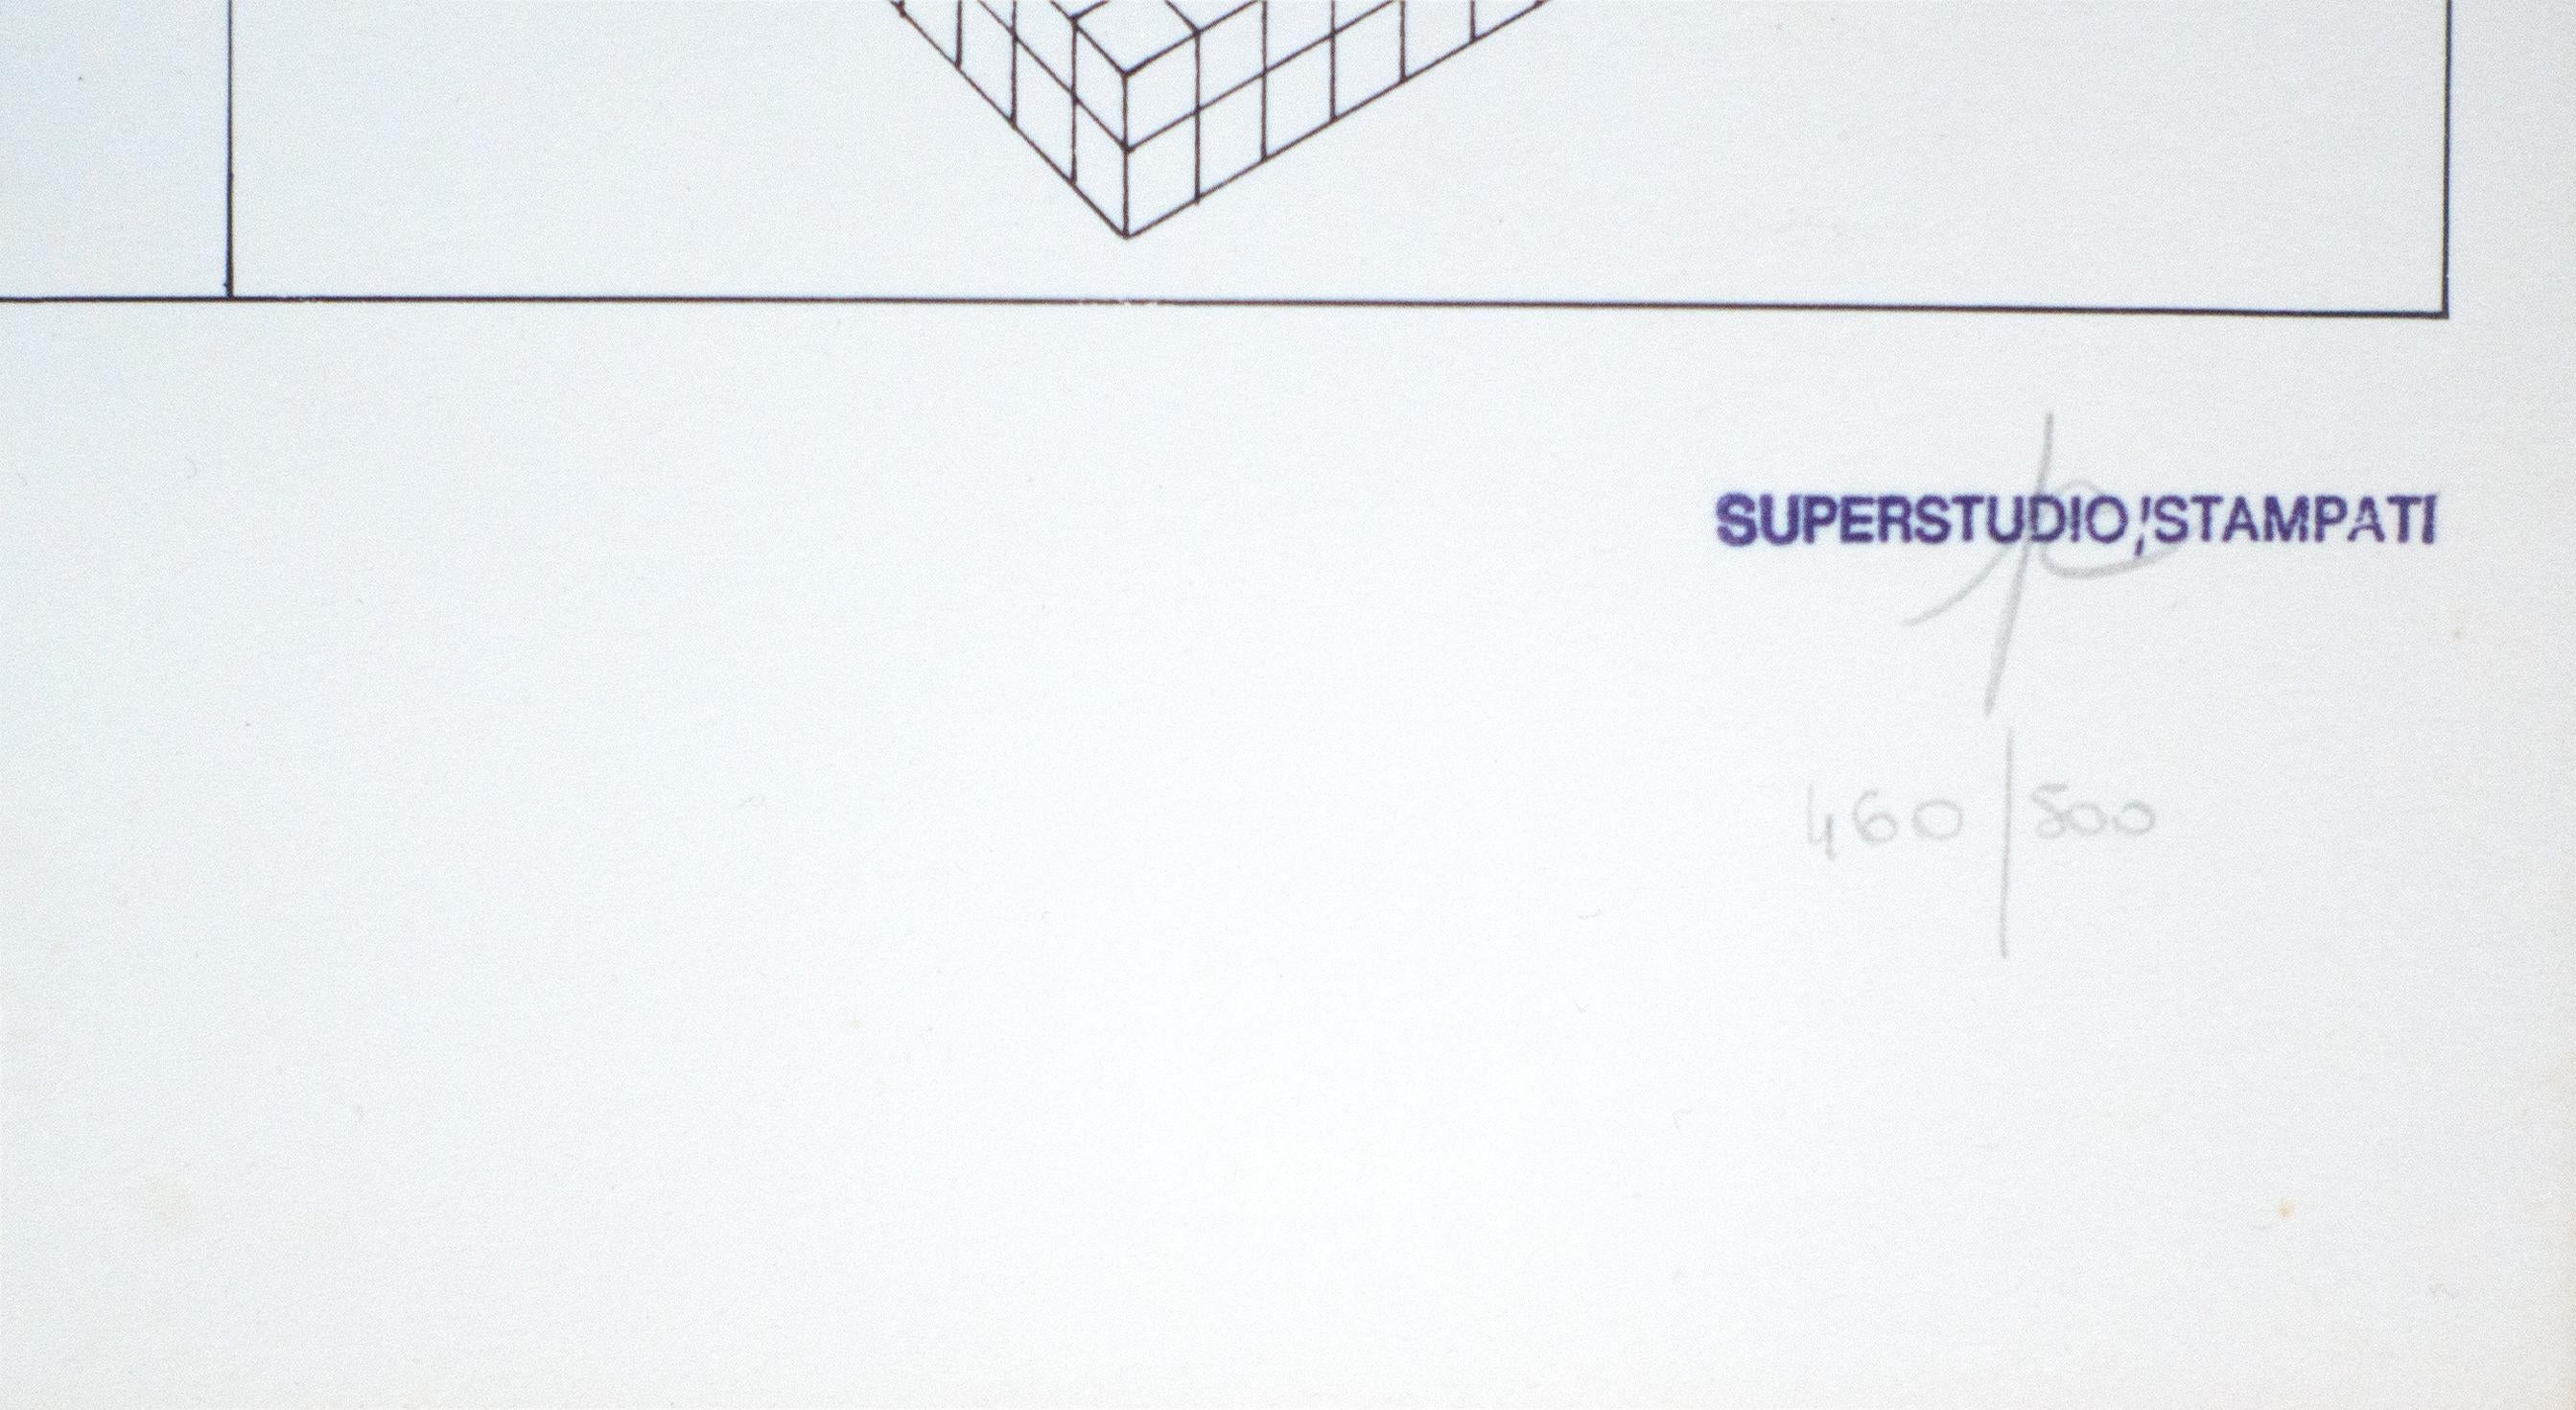  Istogrammi, Superstudio, Radical Architecture, Screenprint on Paper For Sale 2